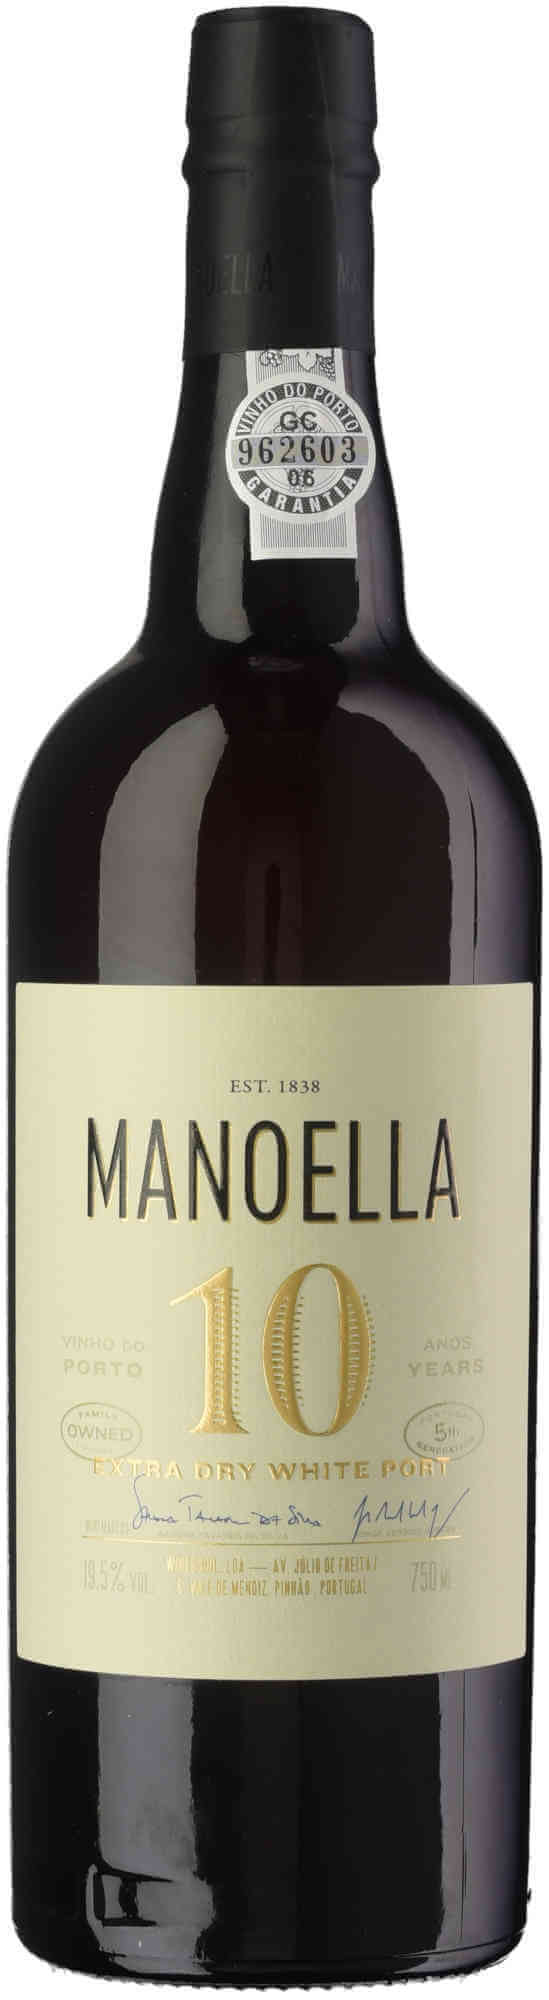 Manoella-10-Yers-Old-Extra-Dry-White-Port